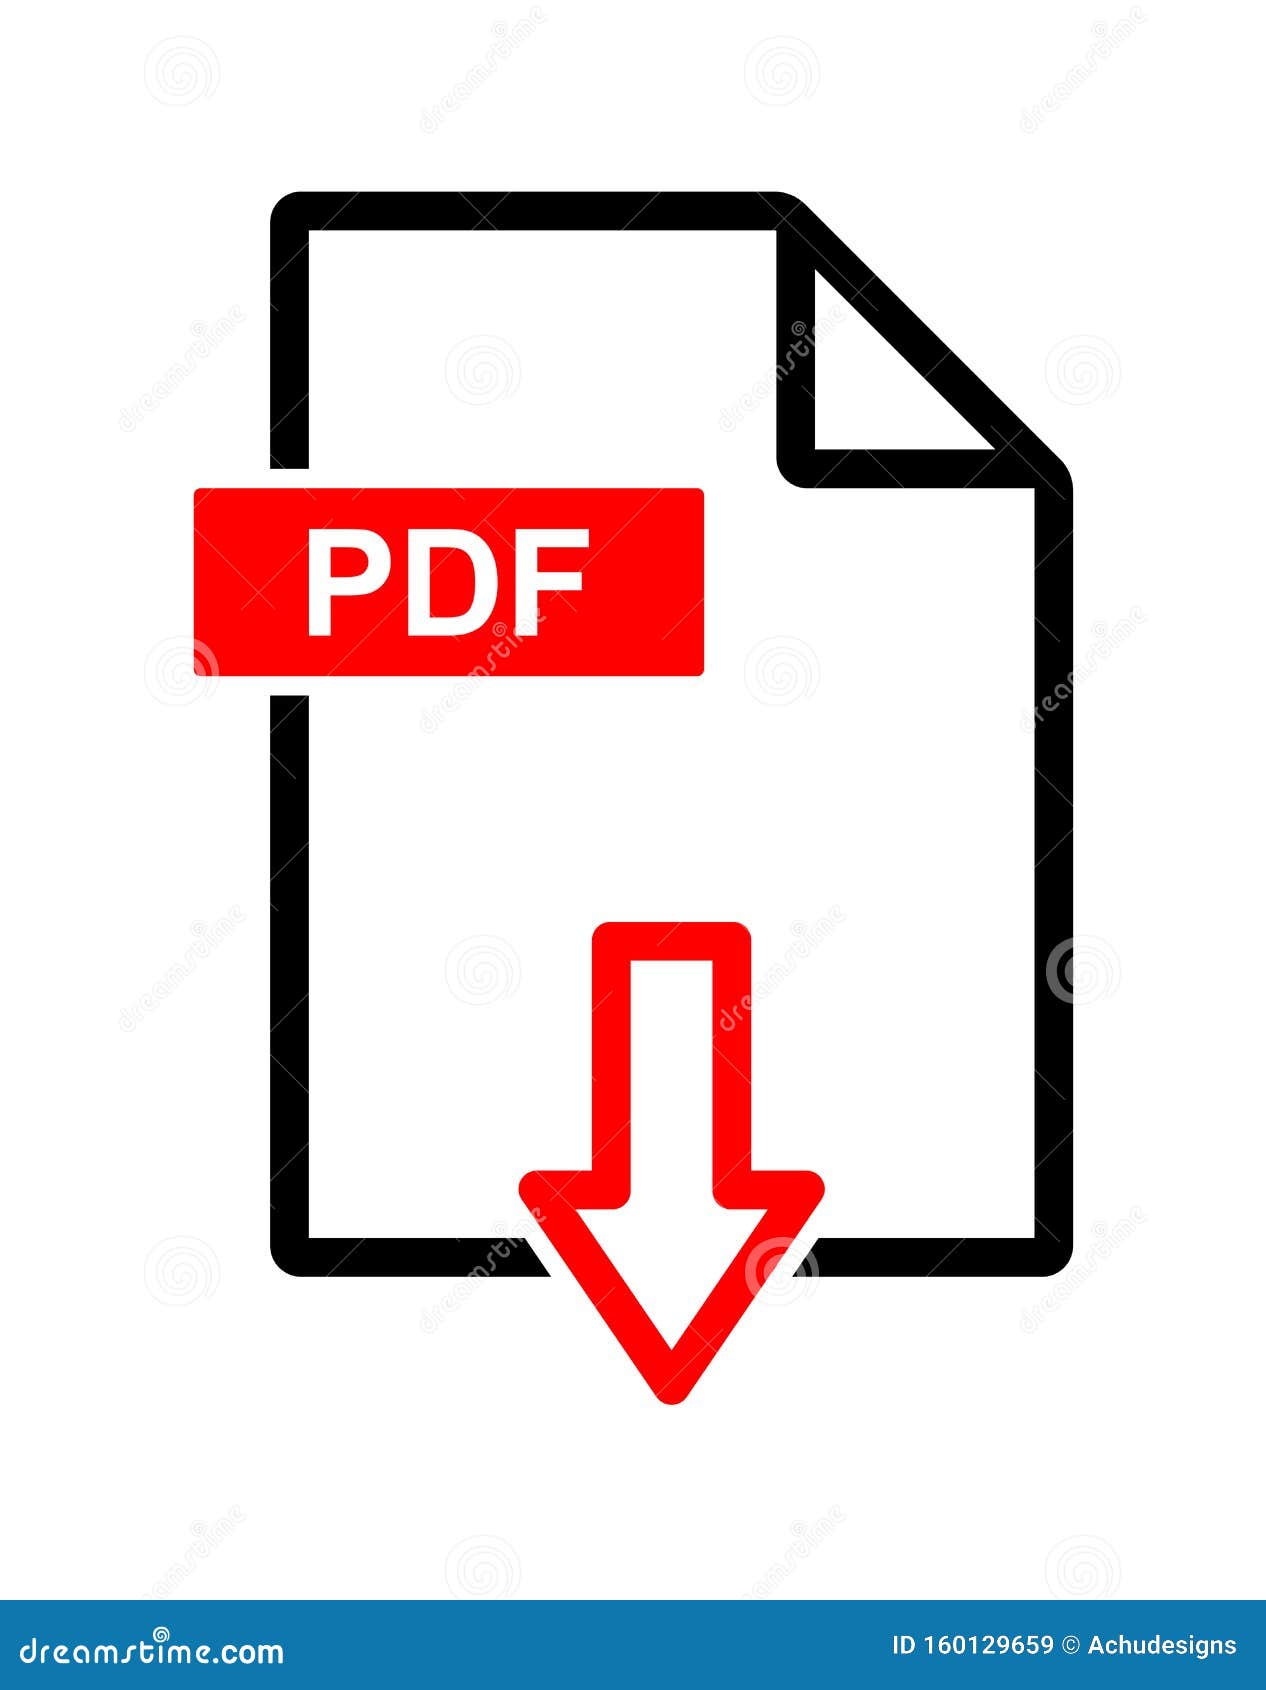 Pdf file download icon stock vector. Illustration of design - 160129659